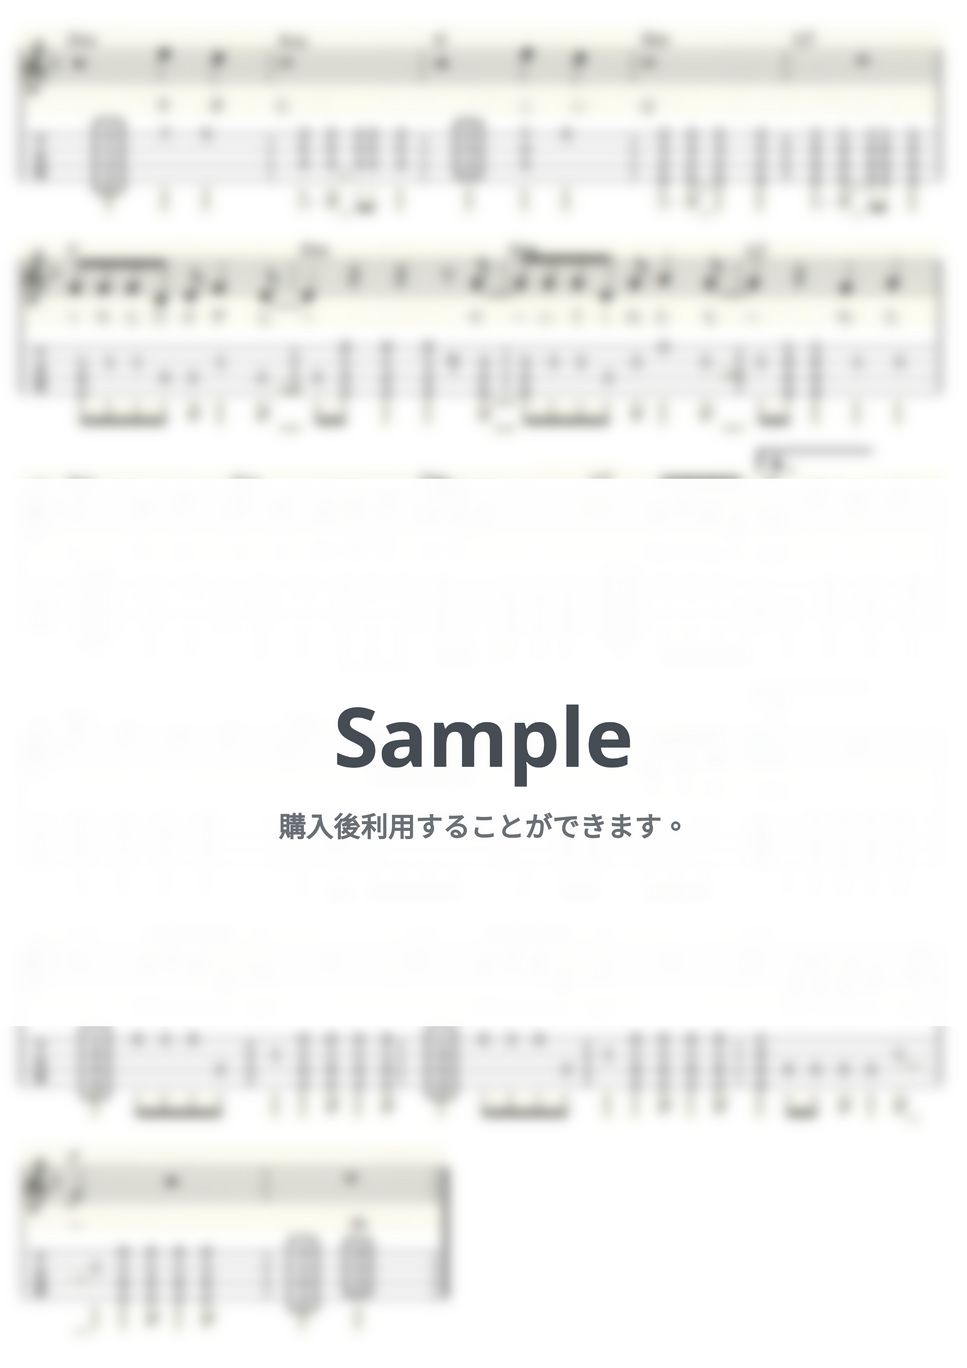 松任谷 由実 - 入江の午後3時 (ｳｸﾚﾚｿﾛ/High-G・Low-G/中級) by ukulelepapa